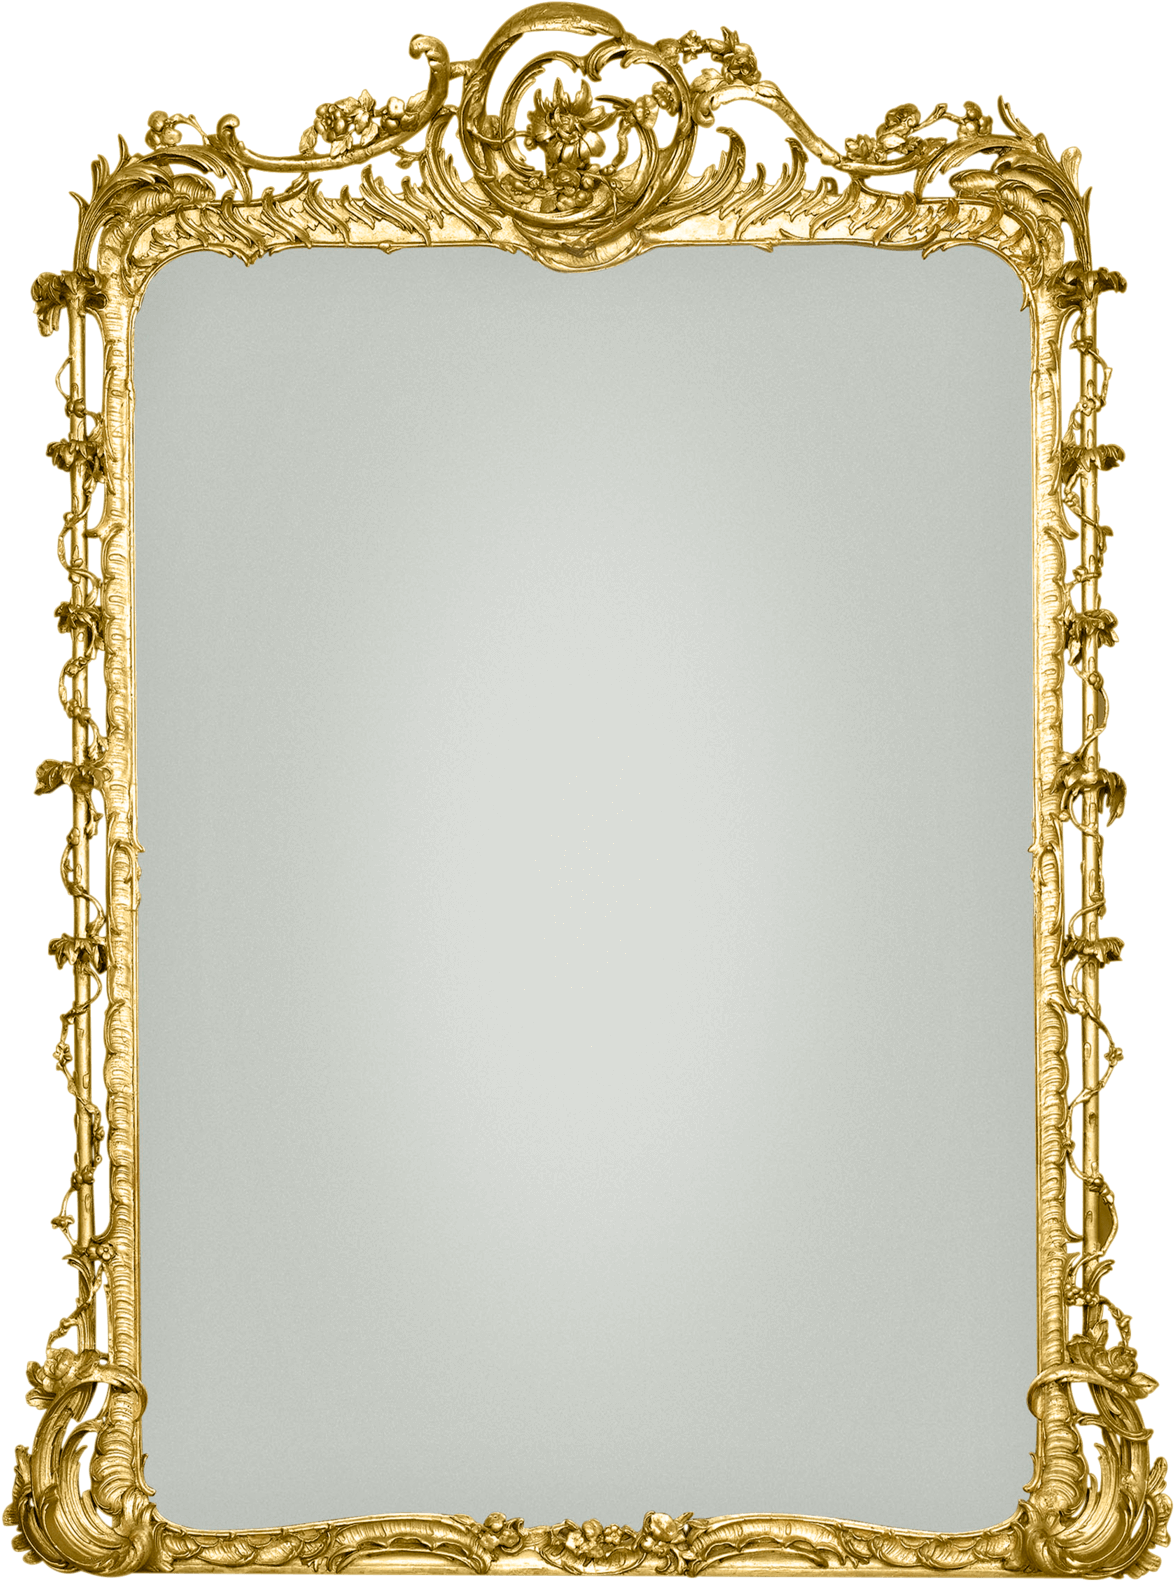 Ornate Golden Antique Mirror Frame